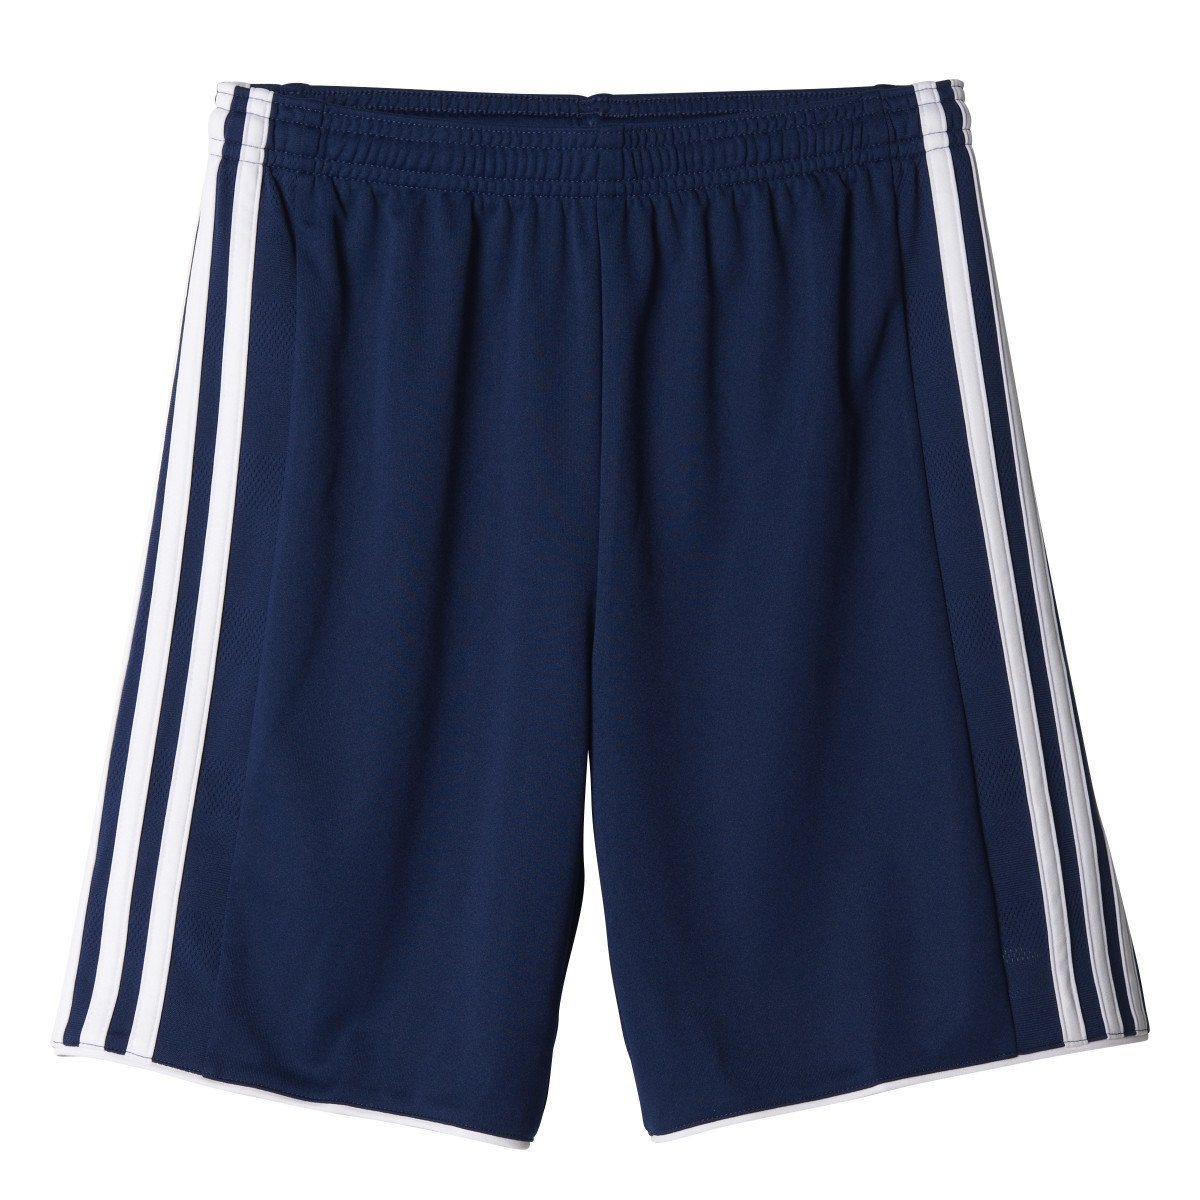 adidas Youth Tastigo 17 Shorts Team Shorts Adidas Dark Blue/White Youth X-Small 